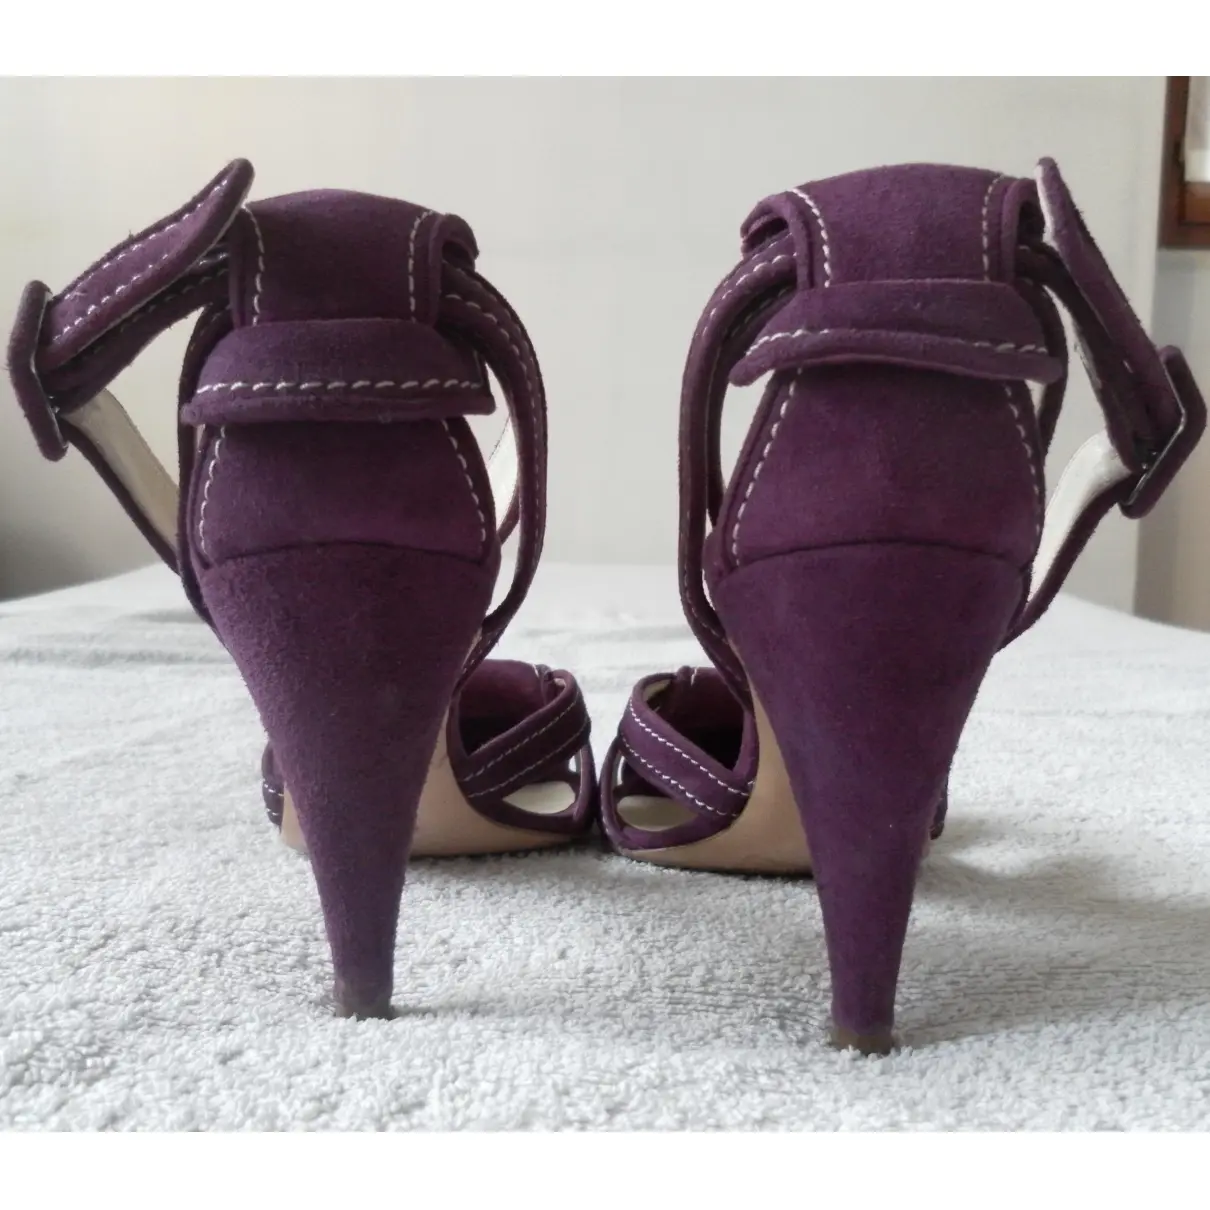 Luxury Rupert Sanderson Sandals Women